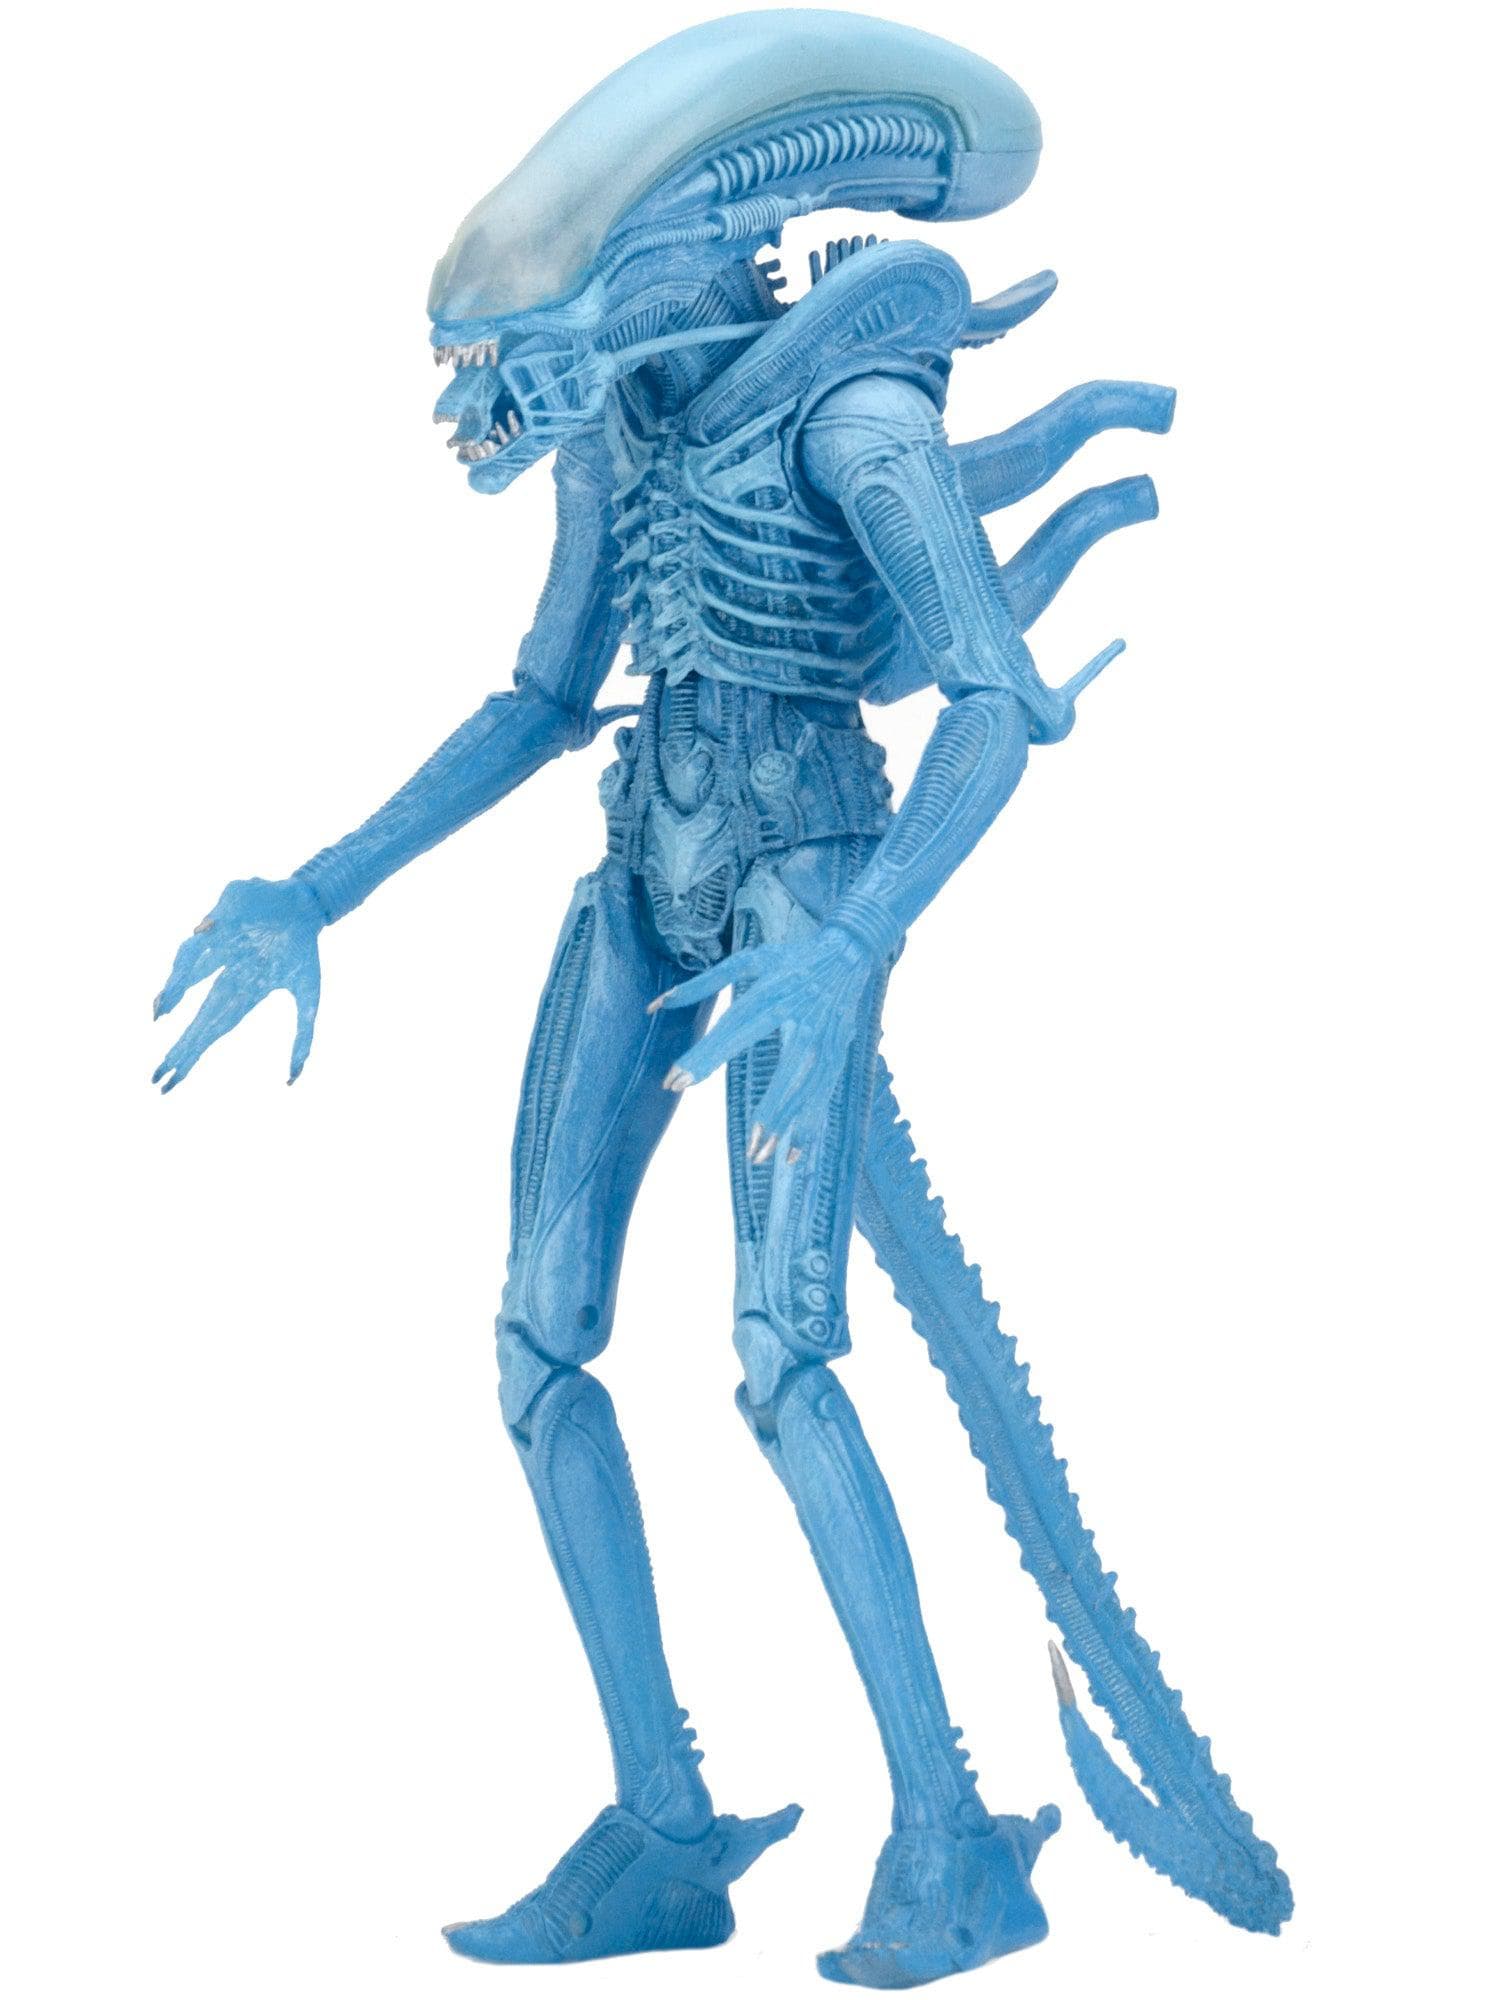 NECA - Aliens - 7" Scale Action Figure - Series 11 Warrior Alien (Kenner) - costumes.com